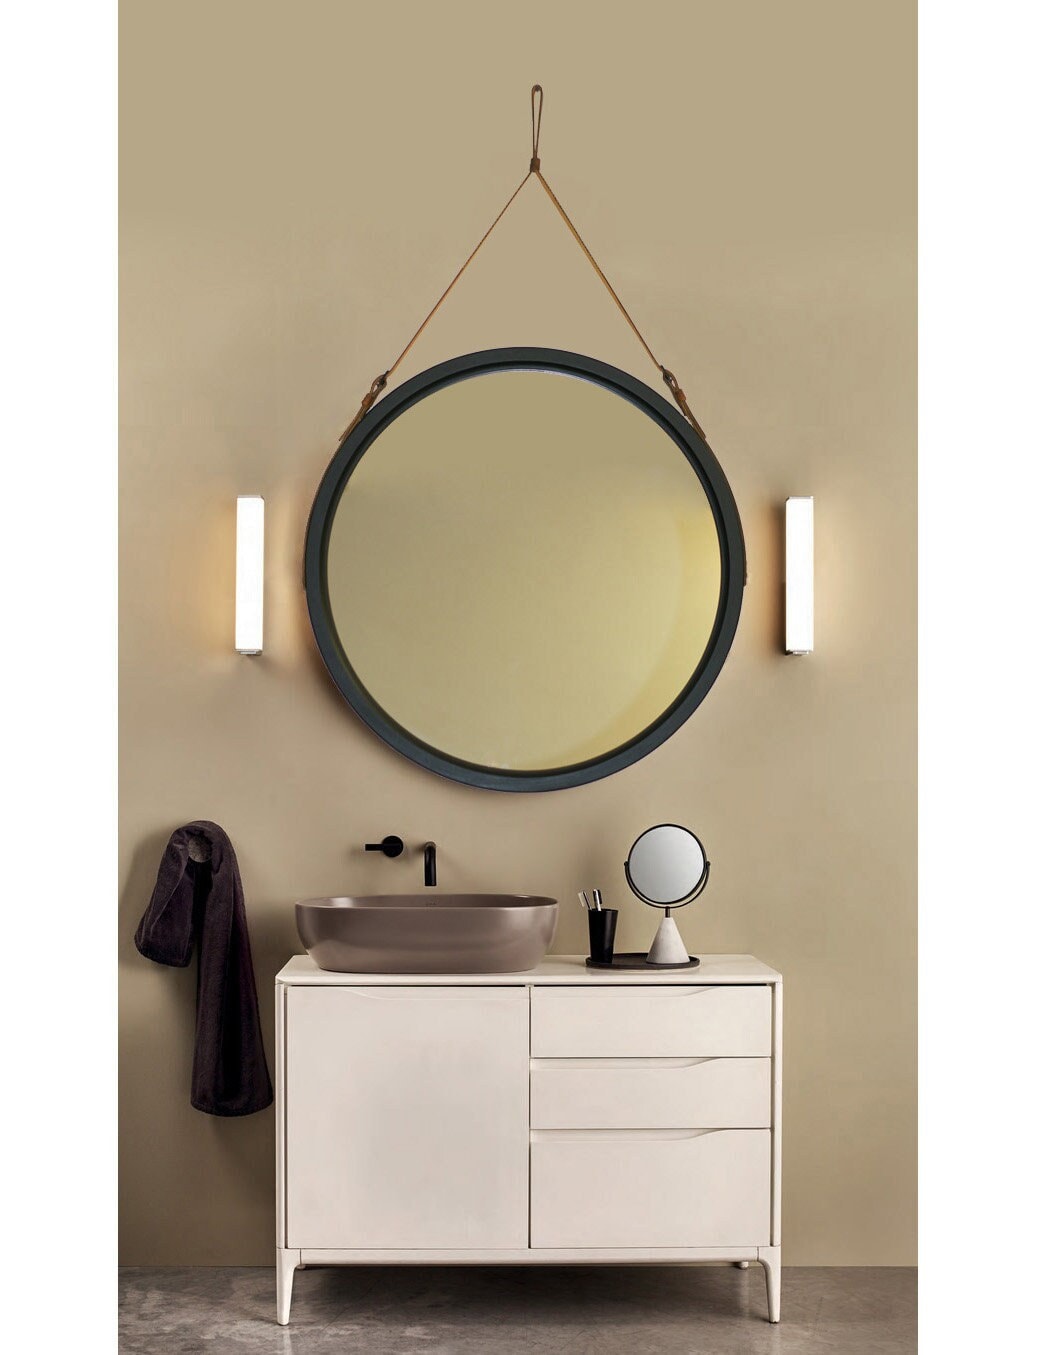 Black frame leather mirror for beauty salon, Black round mirror wall decor Bathroom leather strap wood mirror, Wood framed large wall mirror